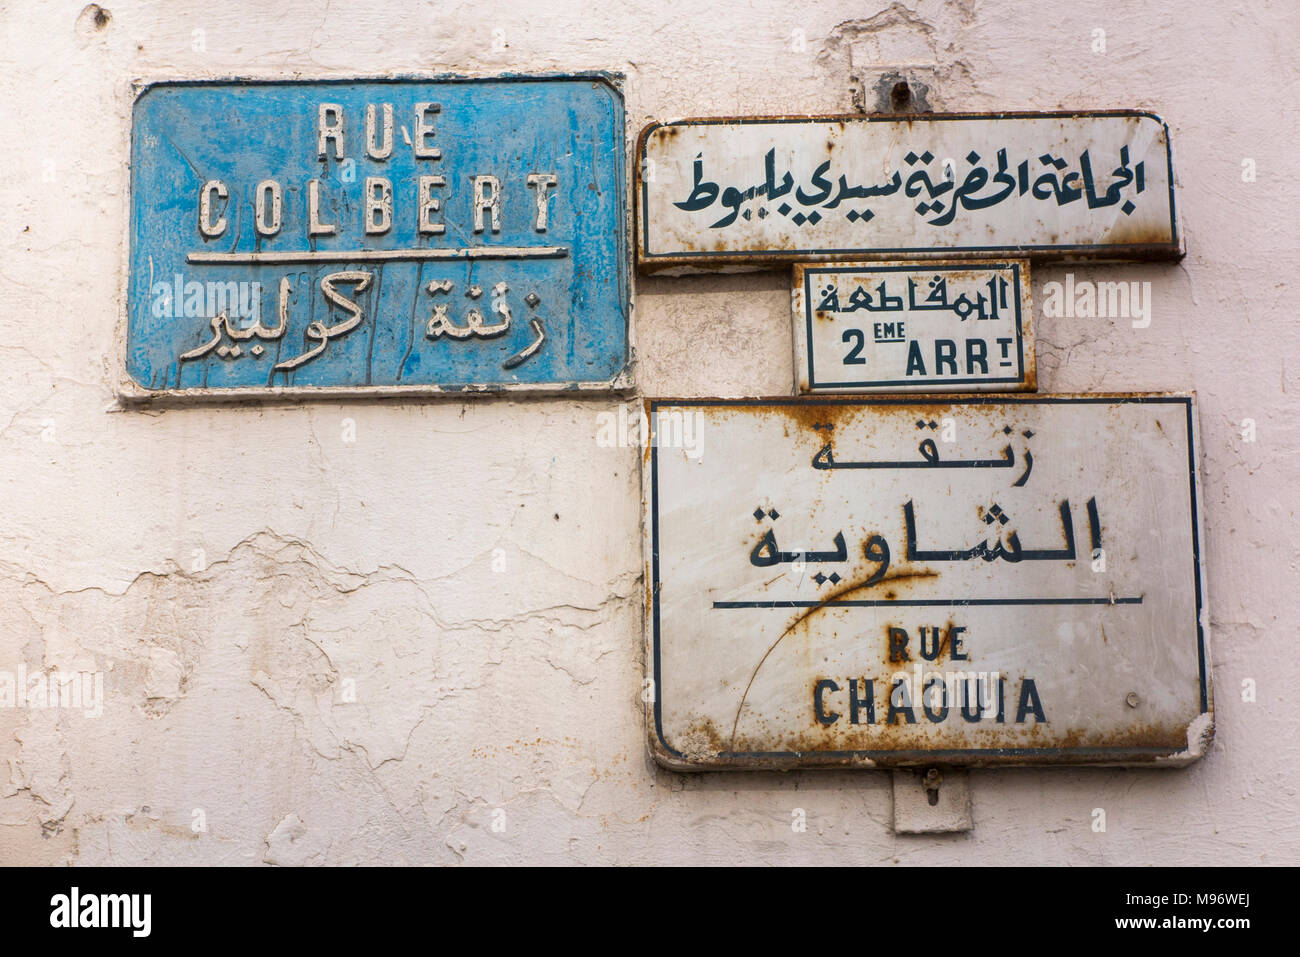 Maroc, Casablanca, rue Colbert et Rue Chaouia plaques de rue en français et en arabe Banque D'Images